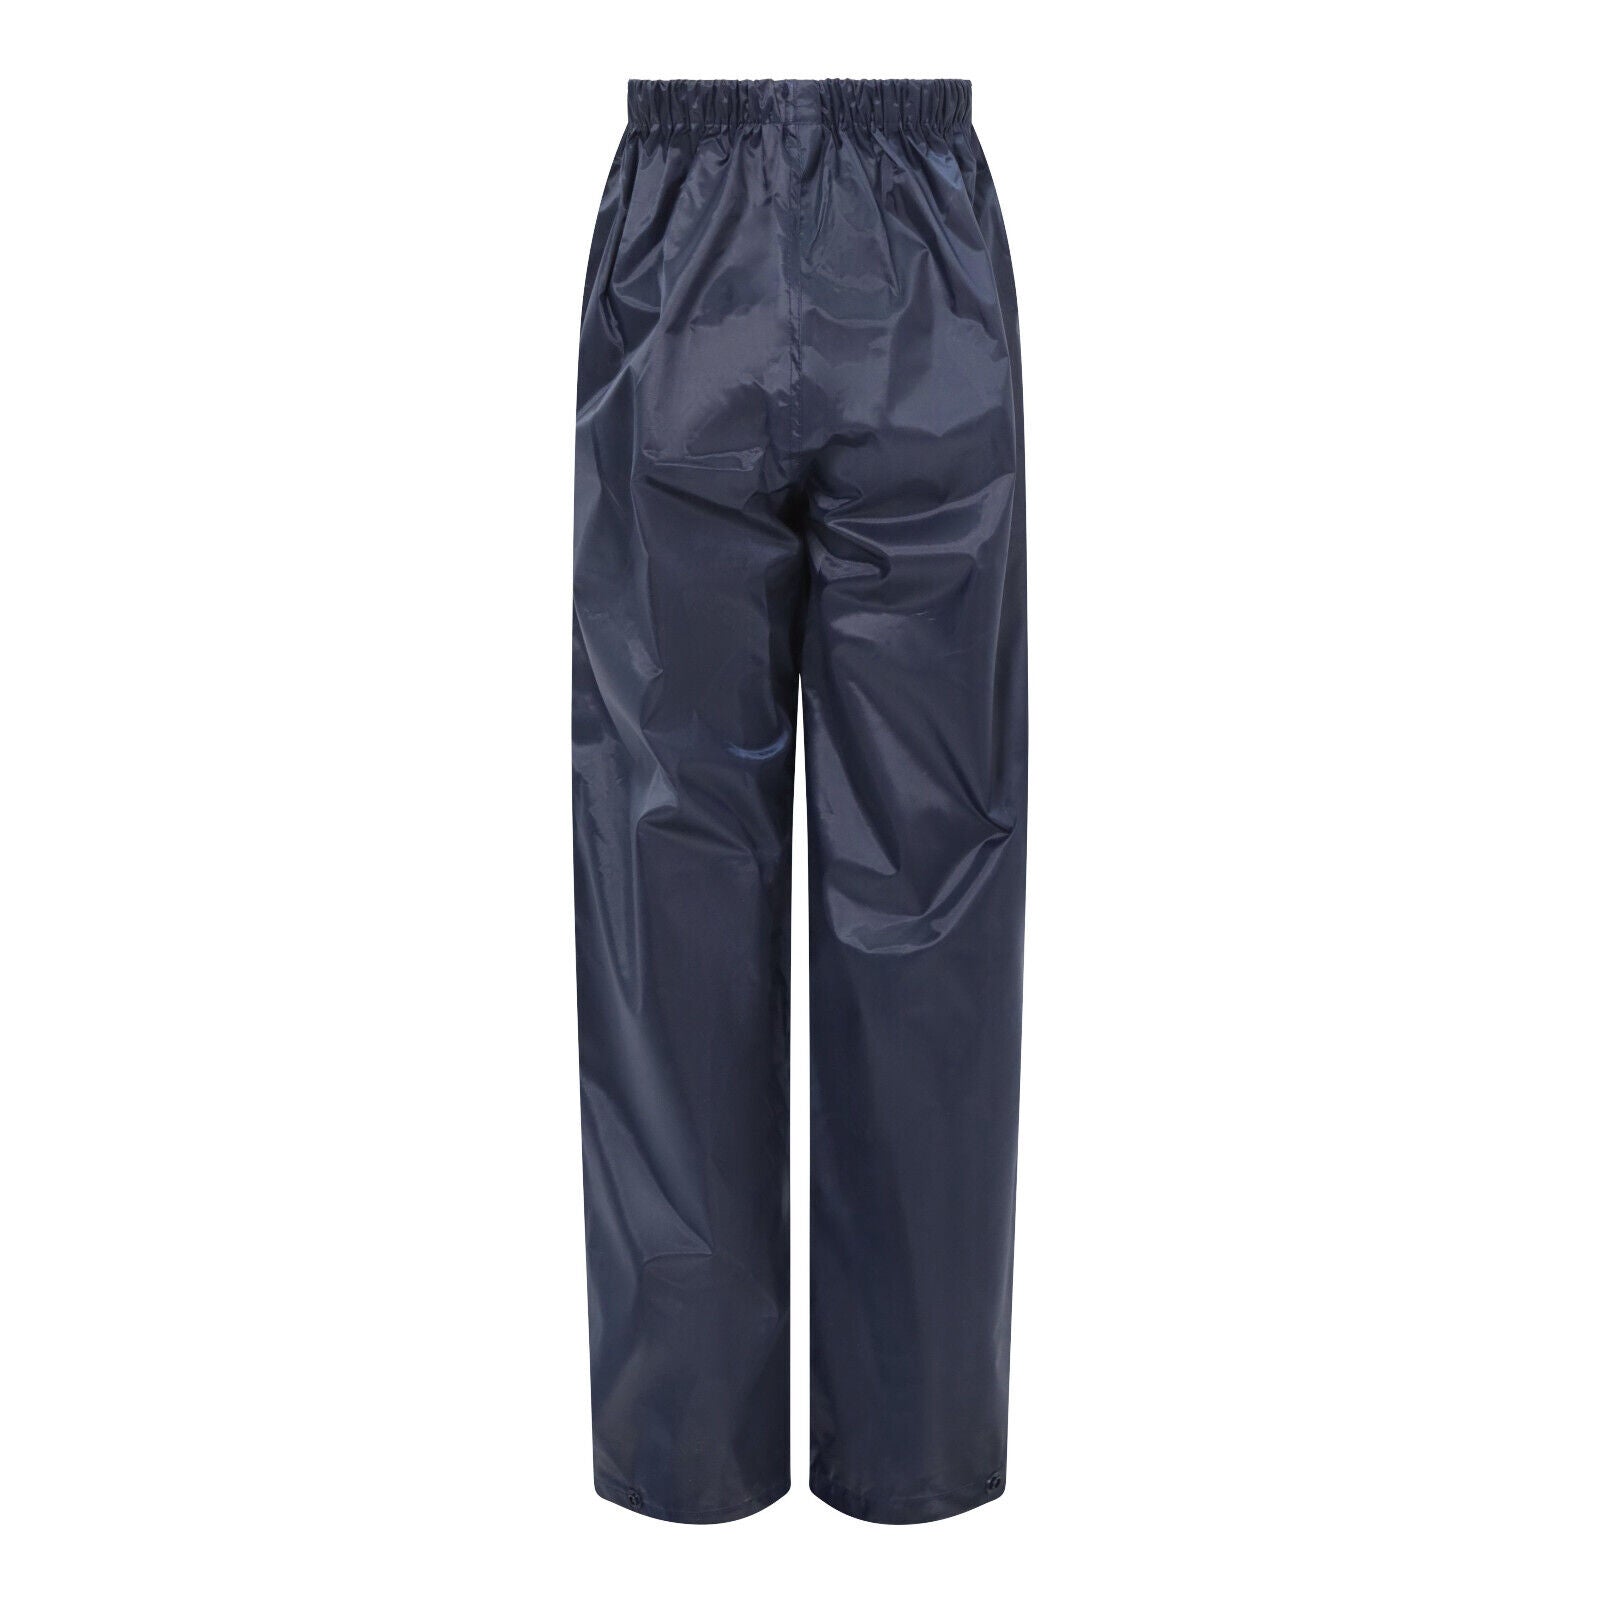 Pantz Men's Rain Waterproof Over Trousers - Black, S : Amazon.co.uk: Fashion